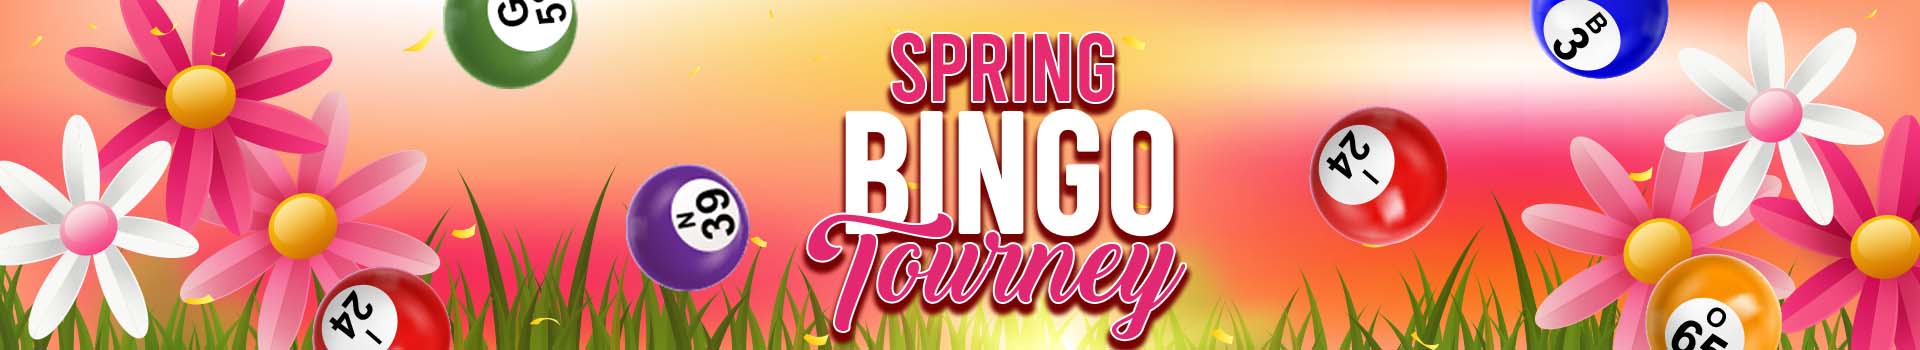 Spring Bingo Tourney Banner